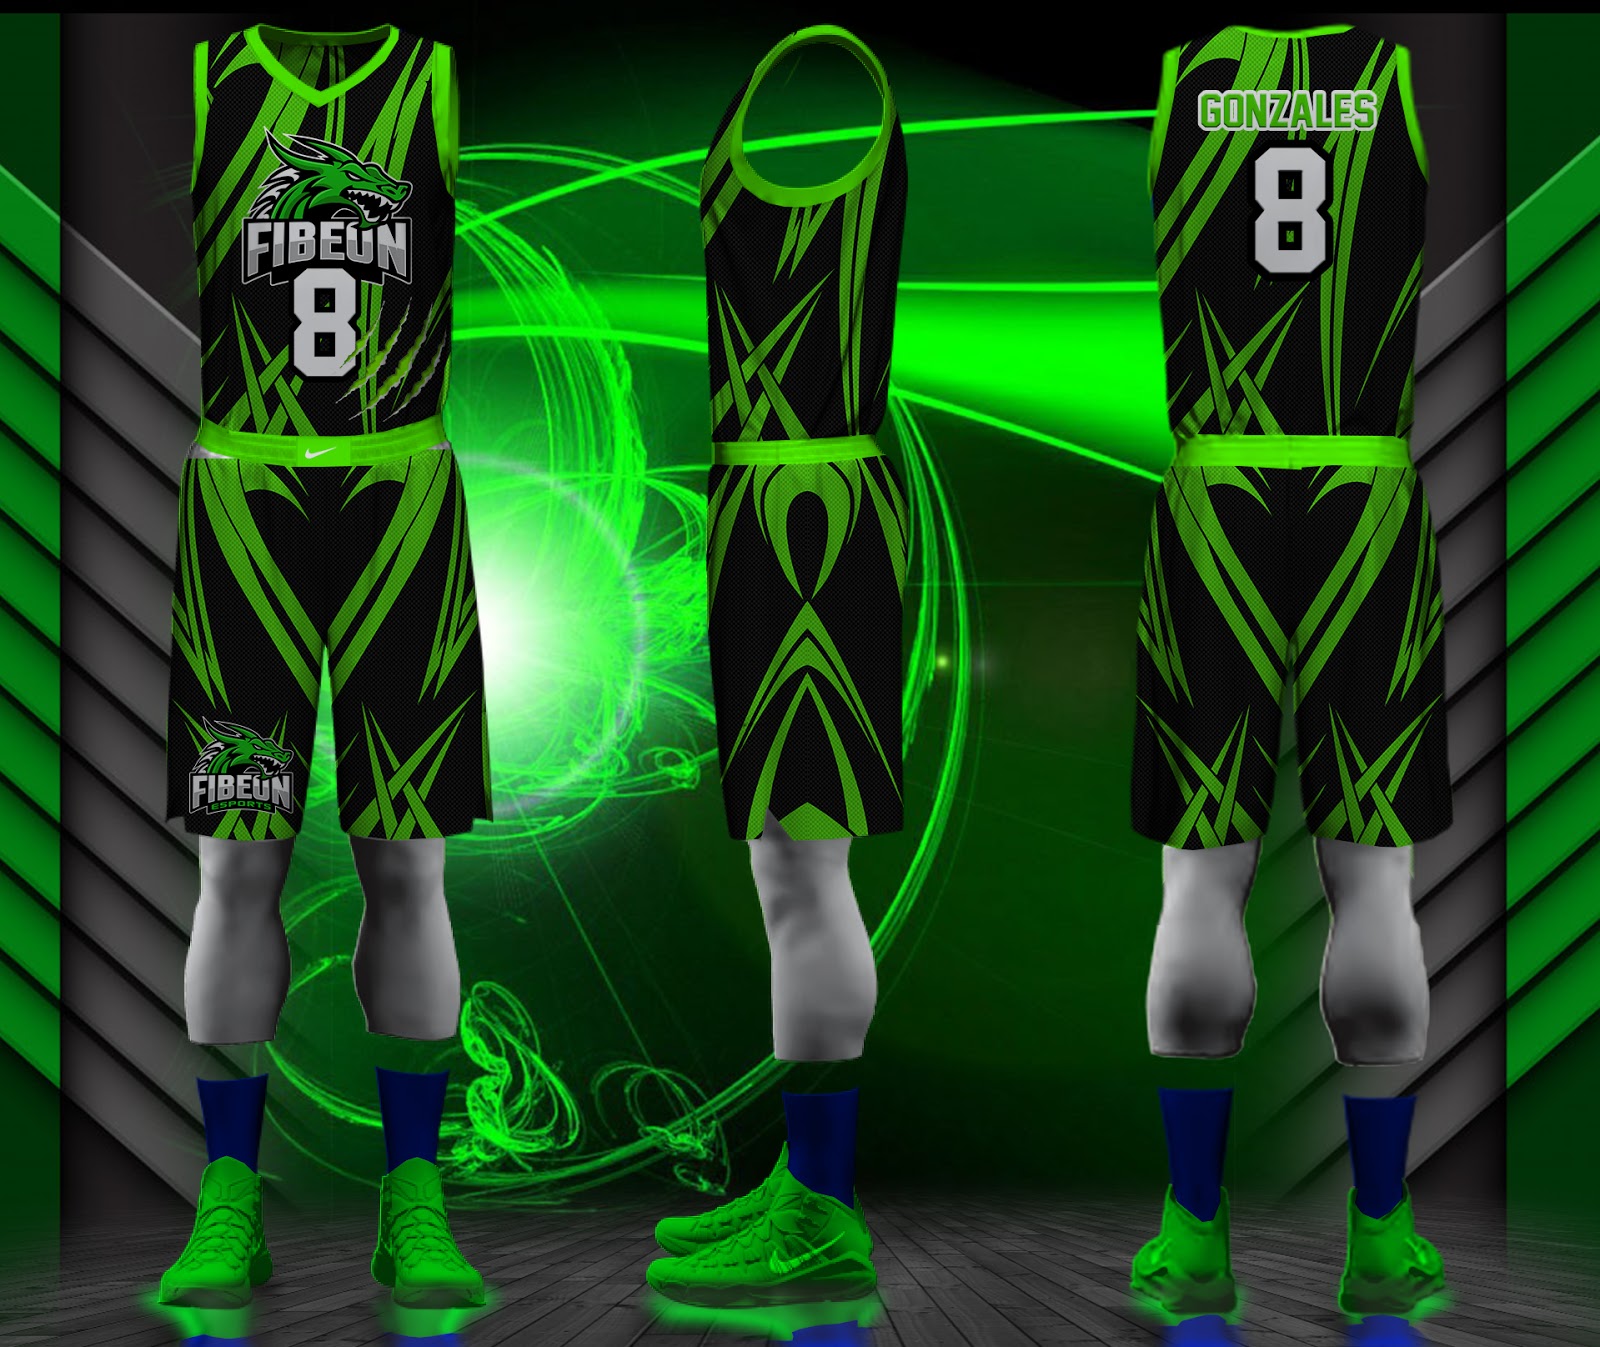 basketball jersey design photoshop